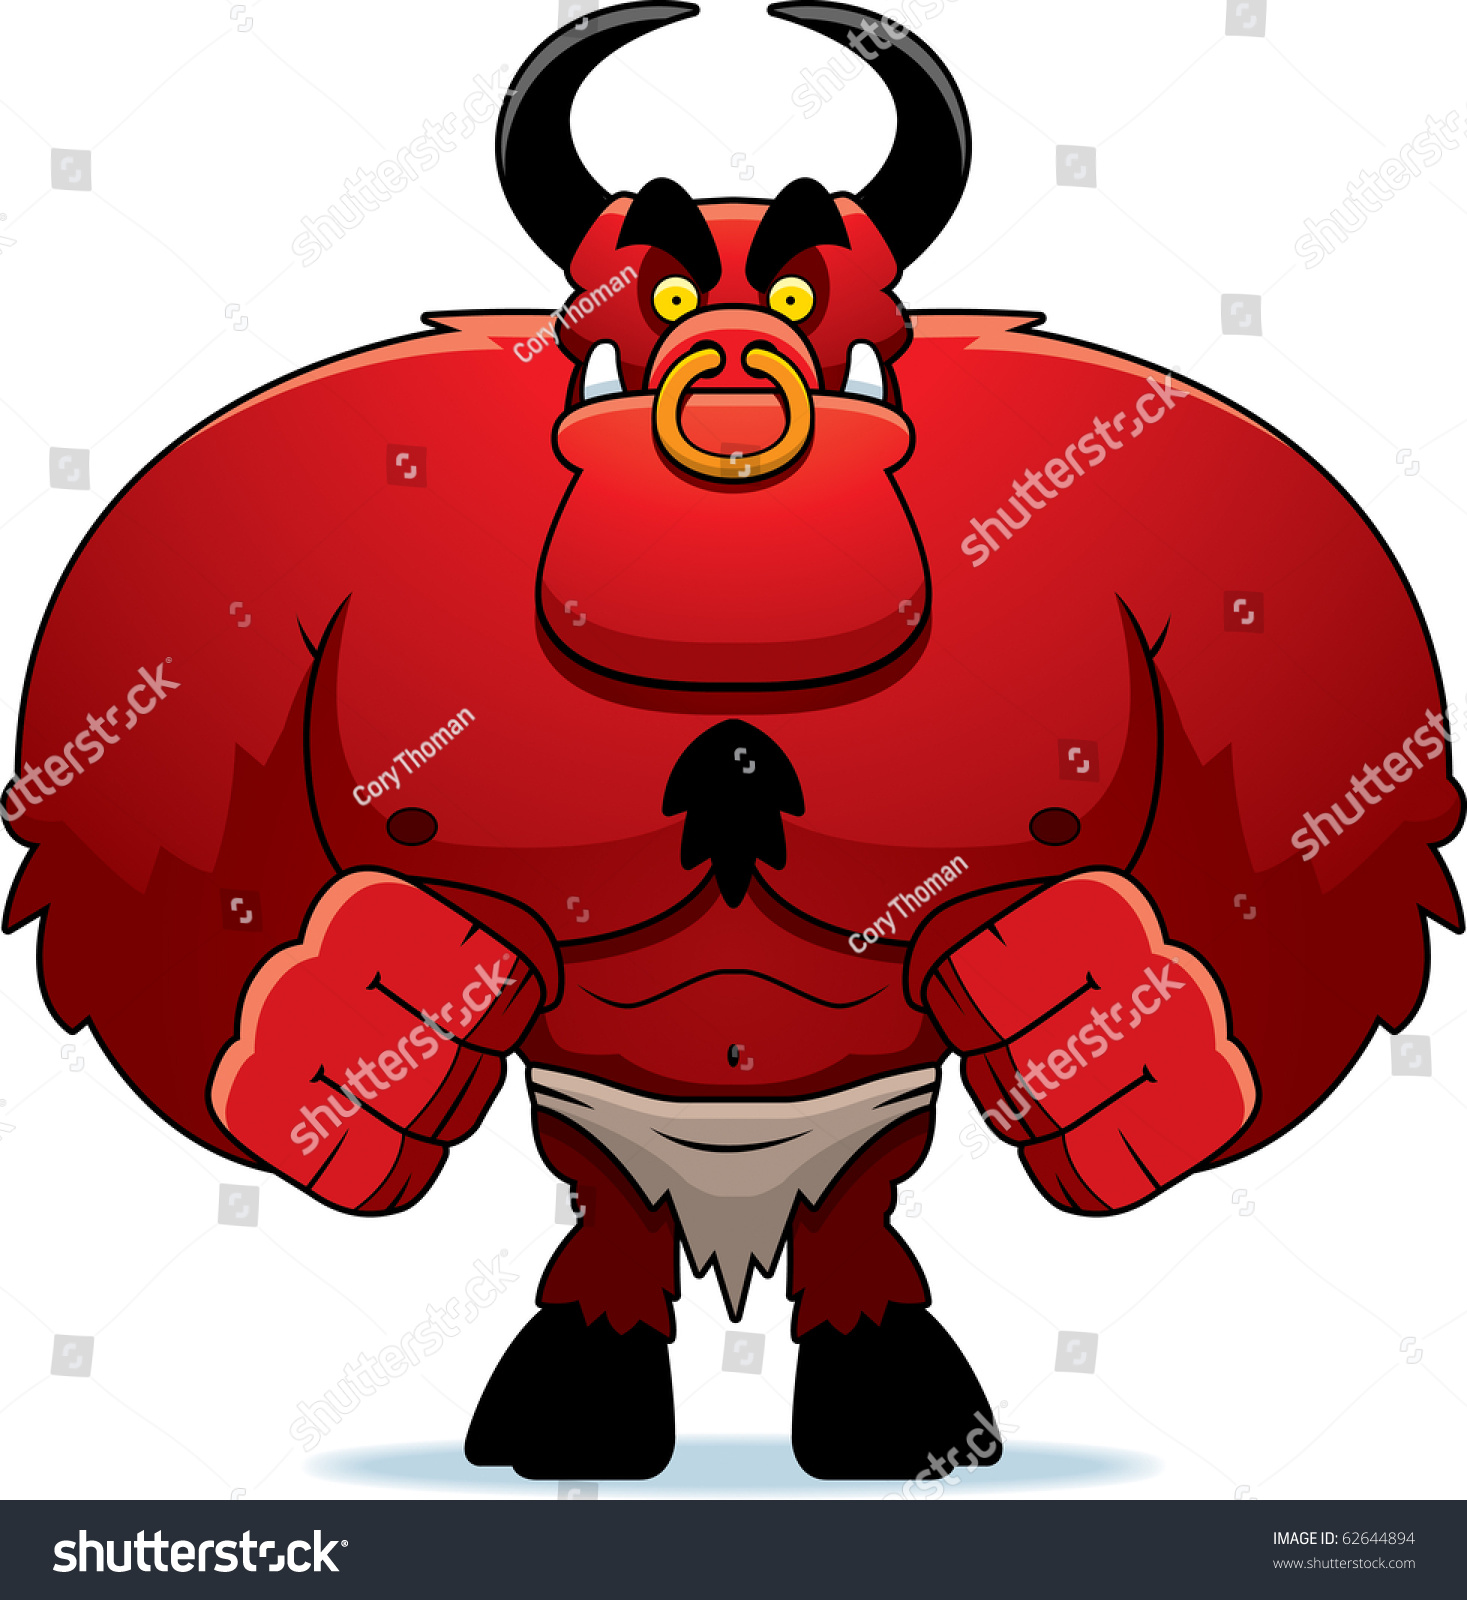 Big Cartoon Red Devil Horns Standing Stock Vector 62644894 - Shutterstock